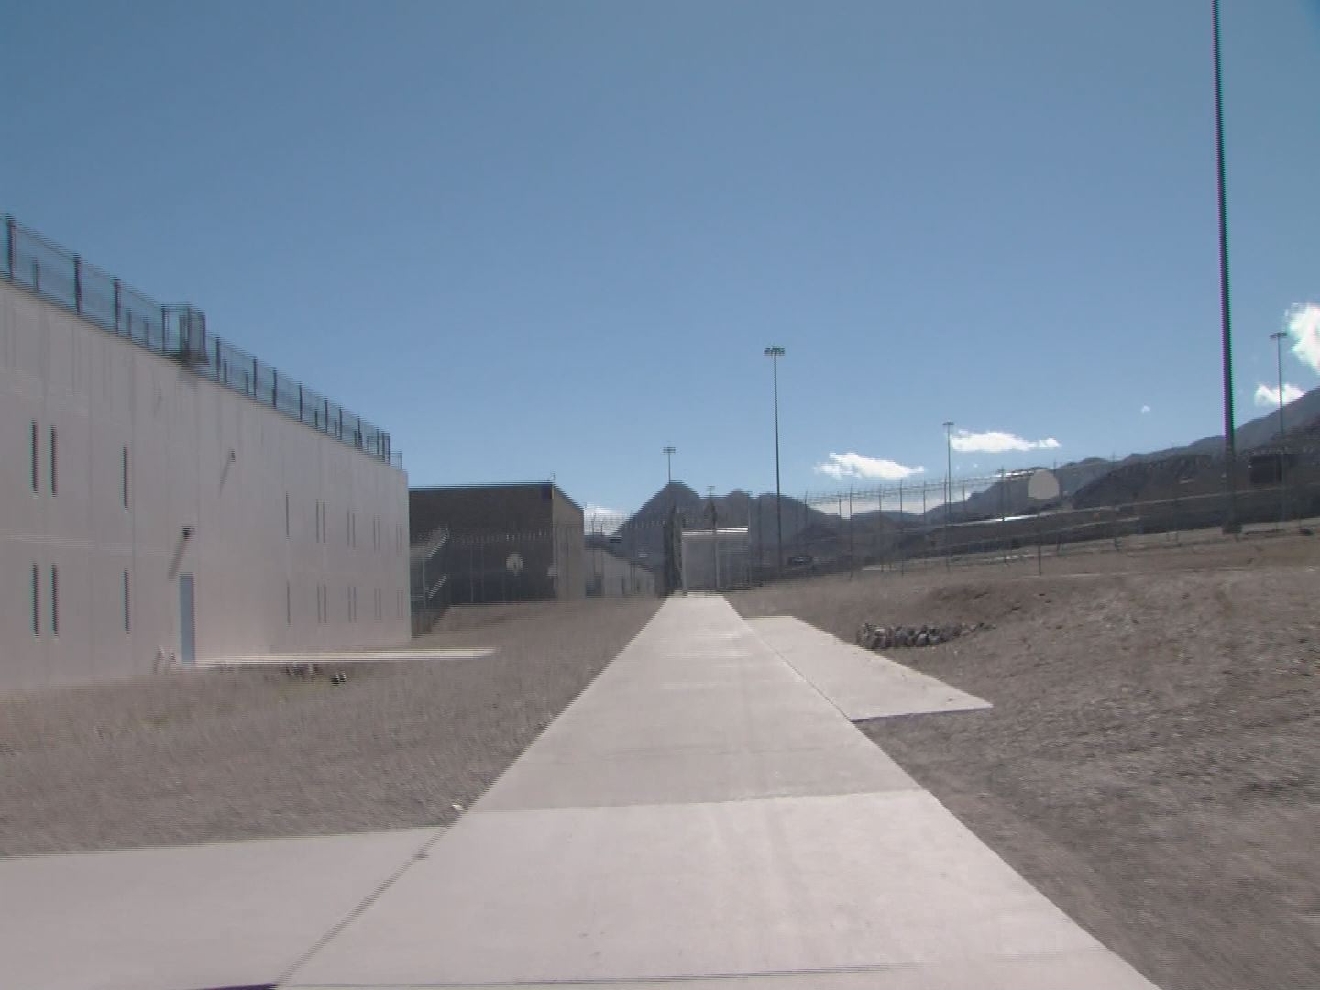 GALLERY A look inside Nevada's High Desert State Prison KSNV